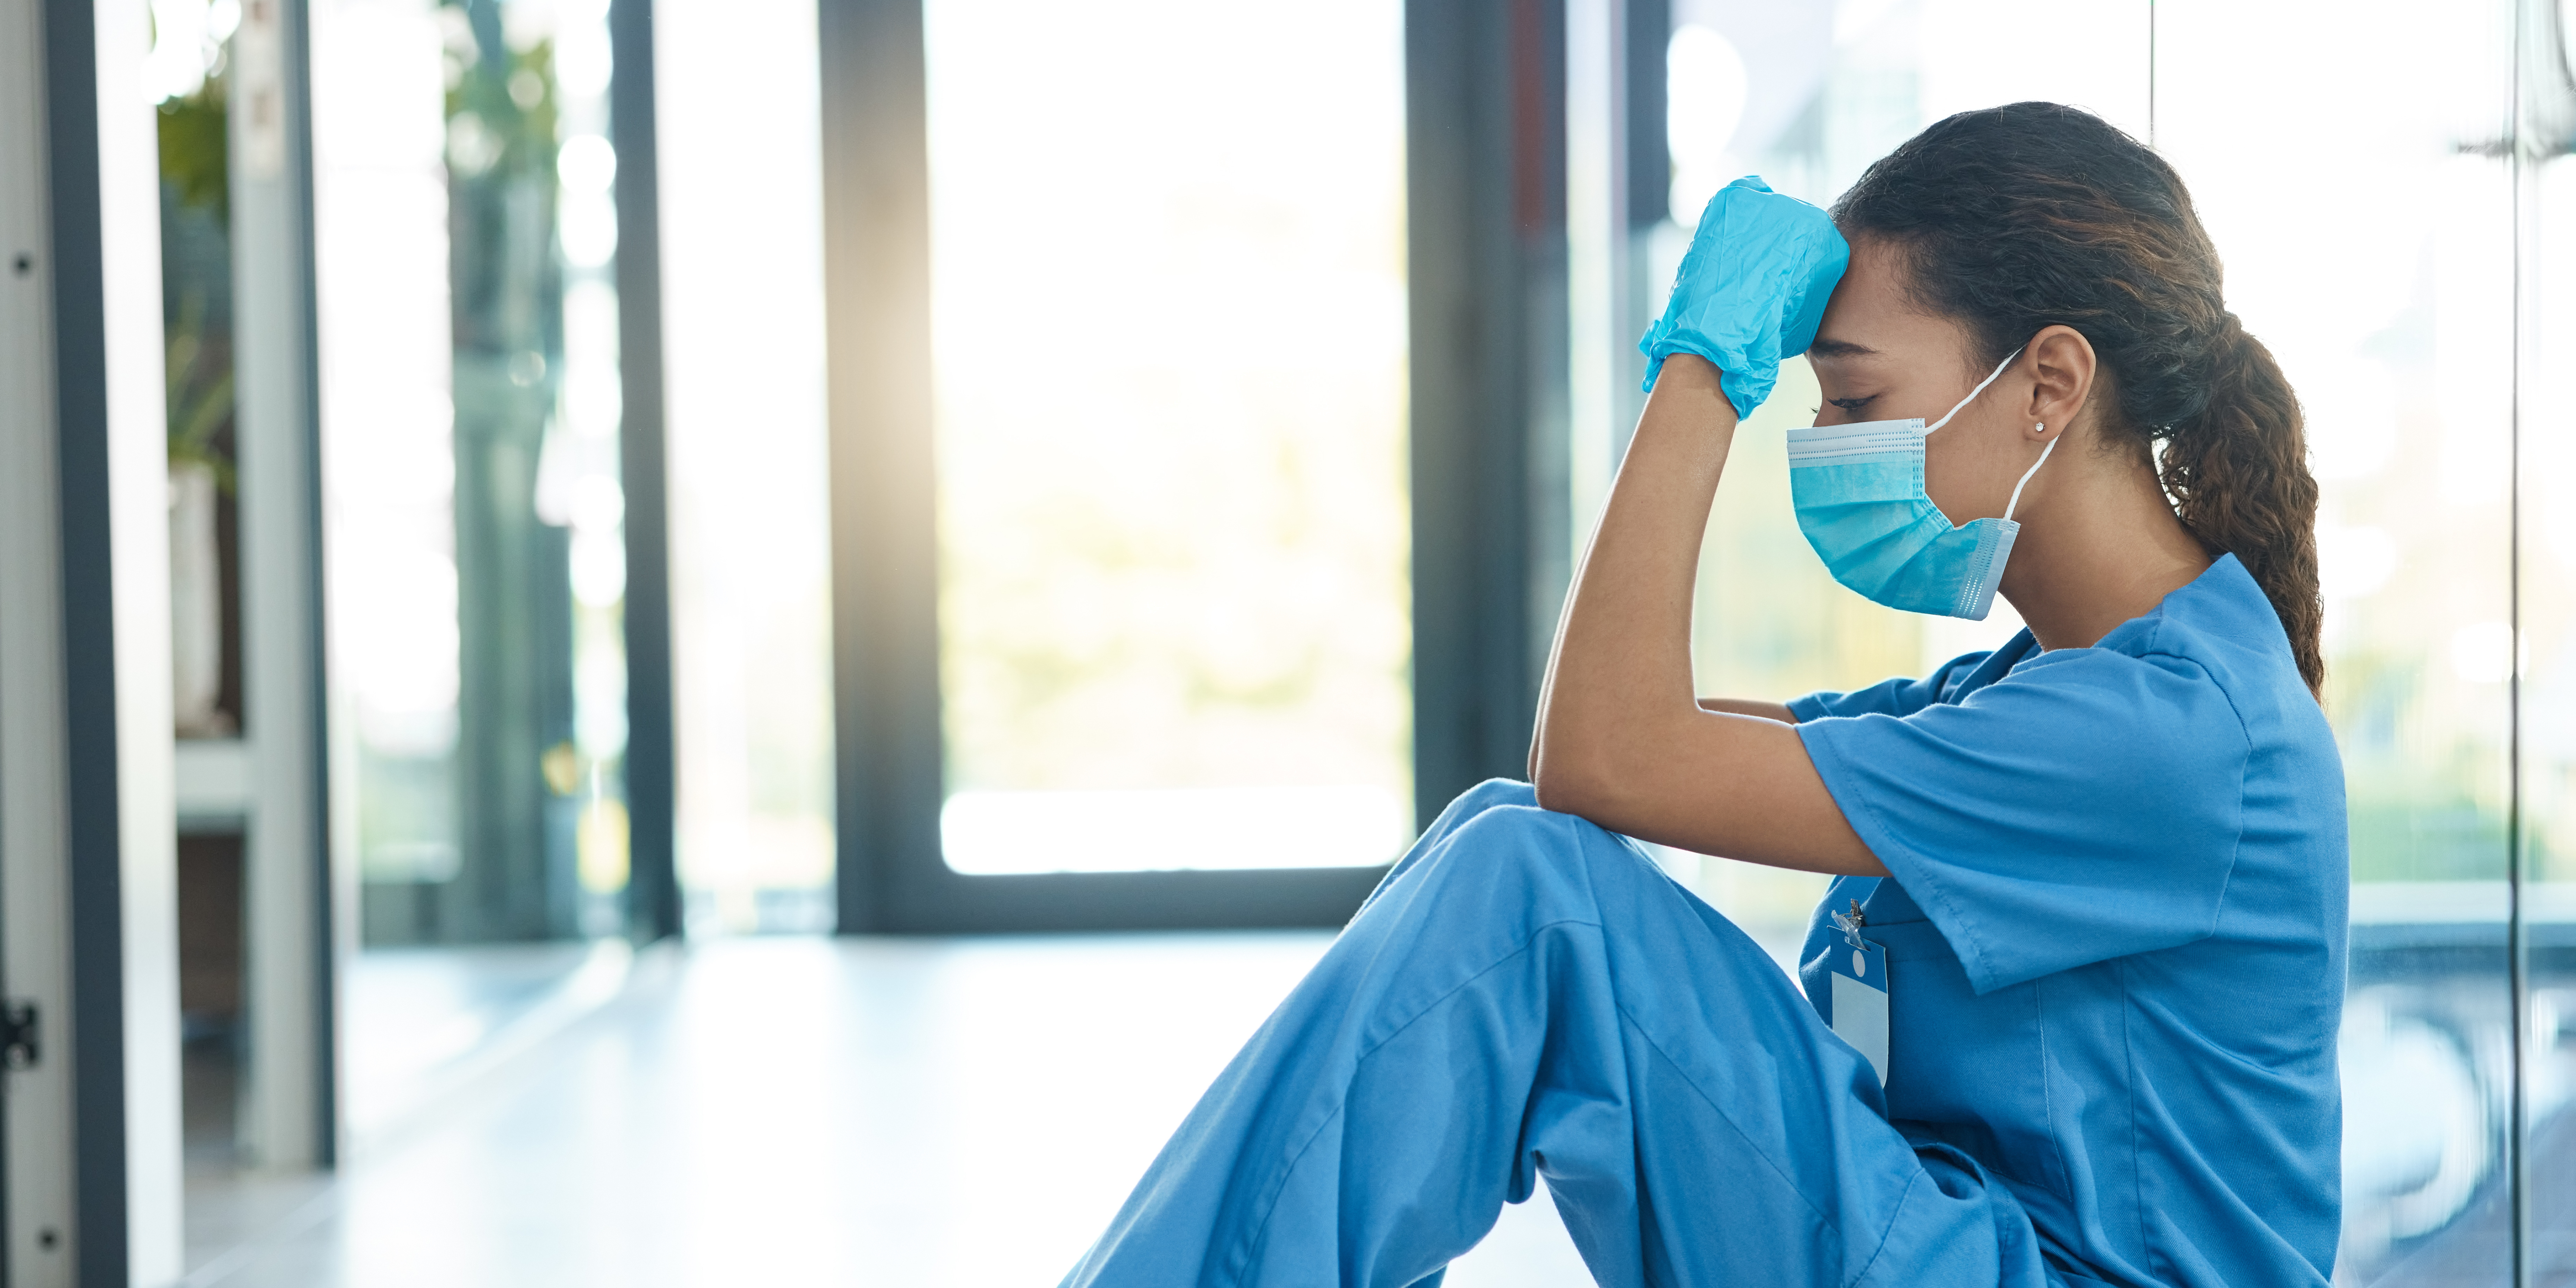 Is the nurses strike linked to overworking?